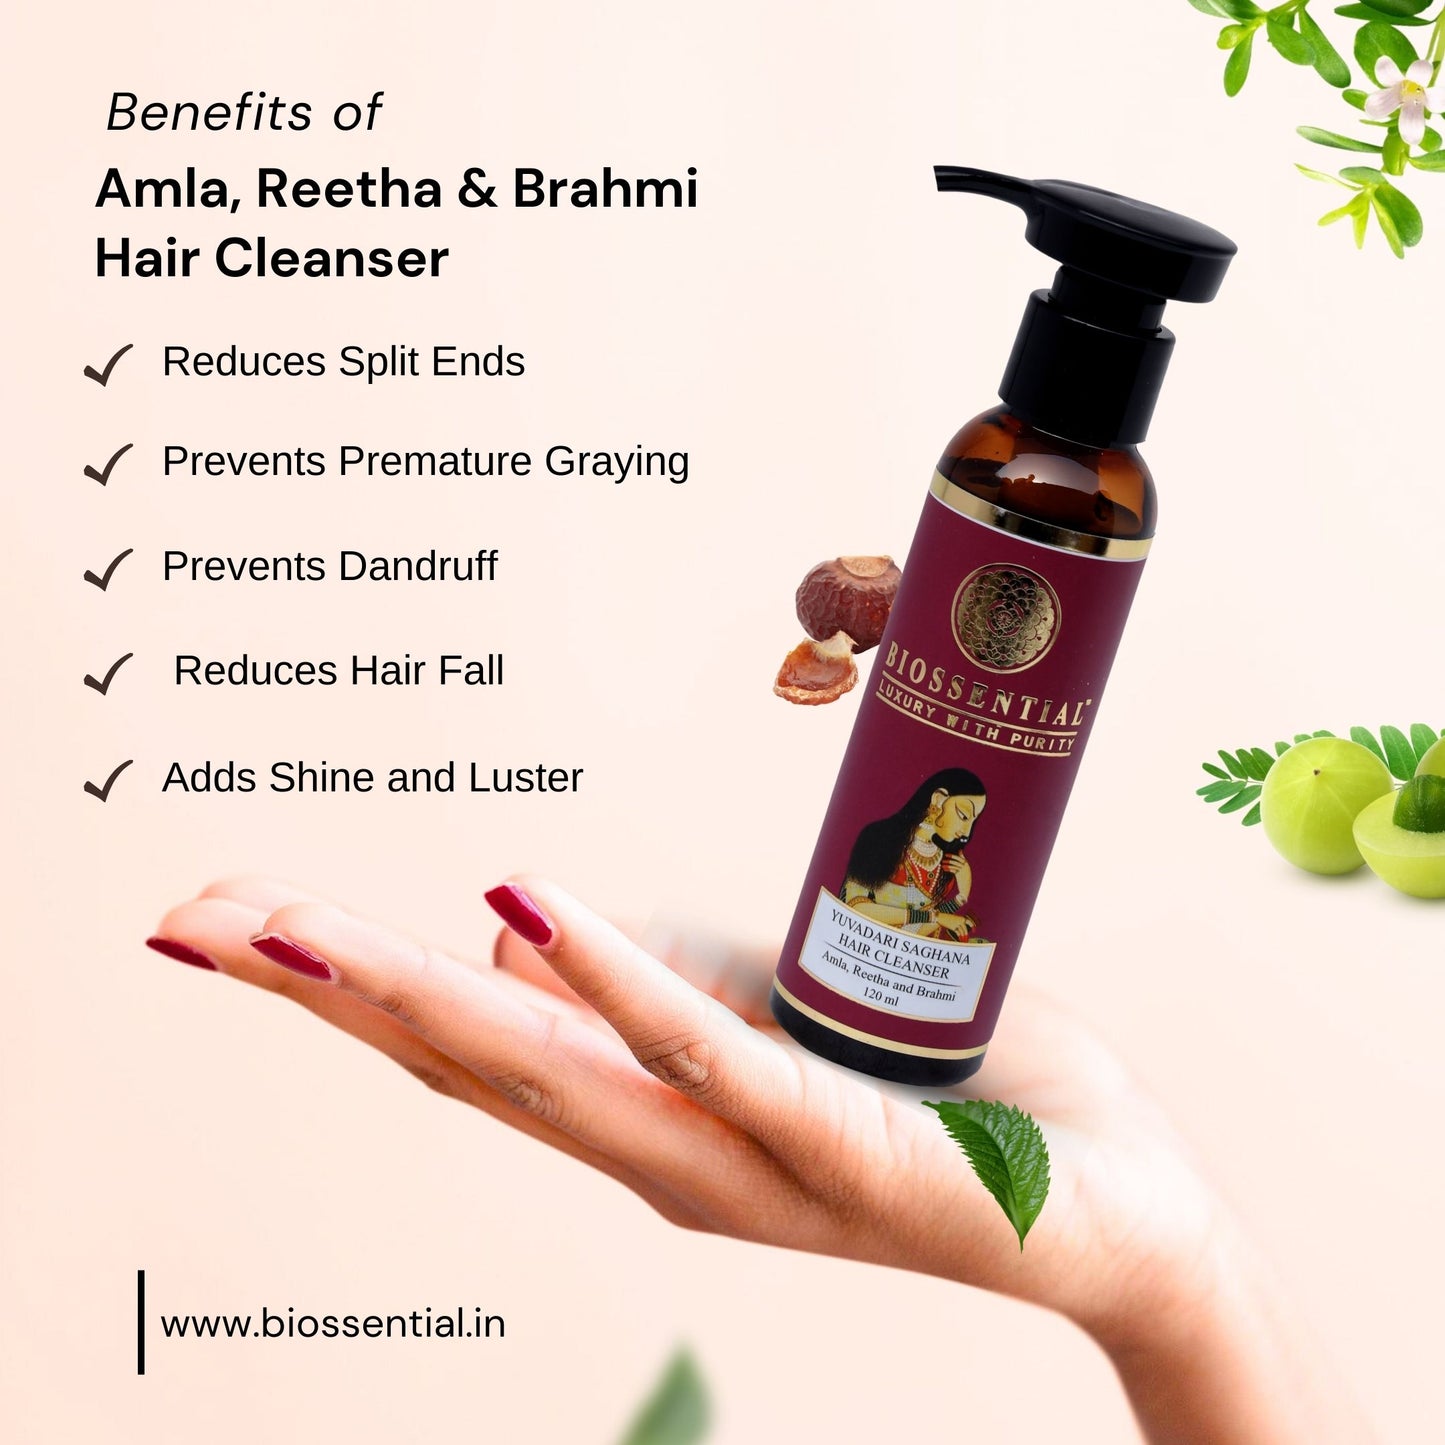 Biossential Saghana Amla, Reetha & Brahmi Hair Cleanser